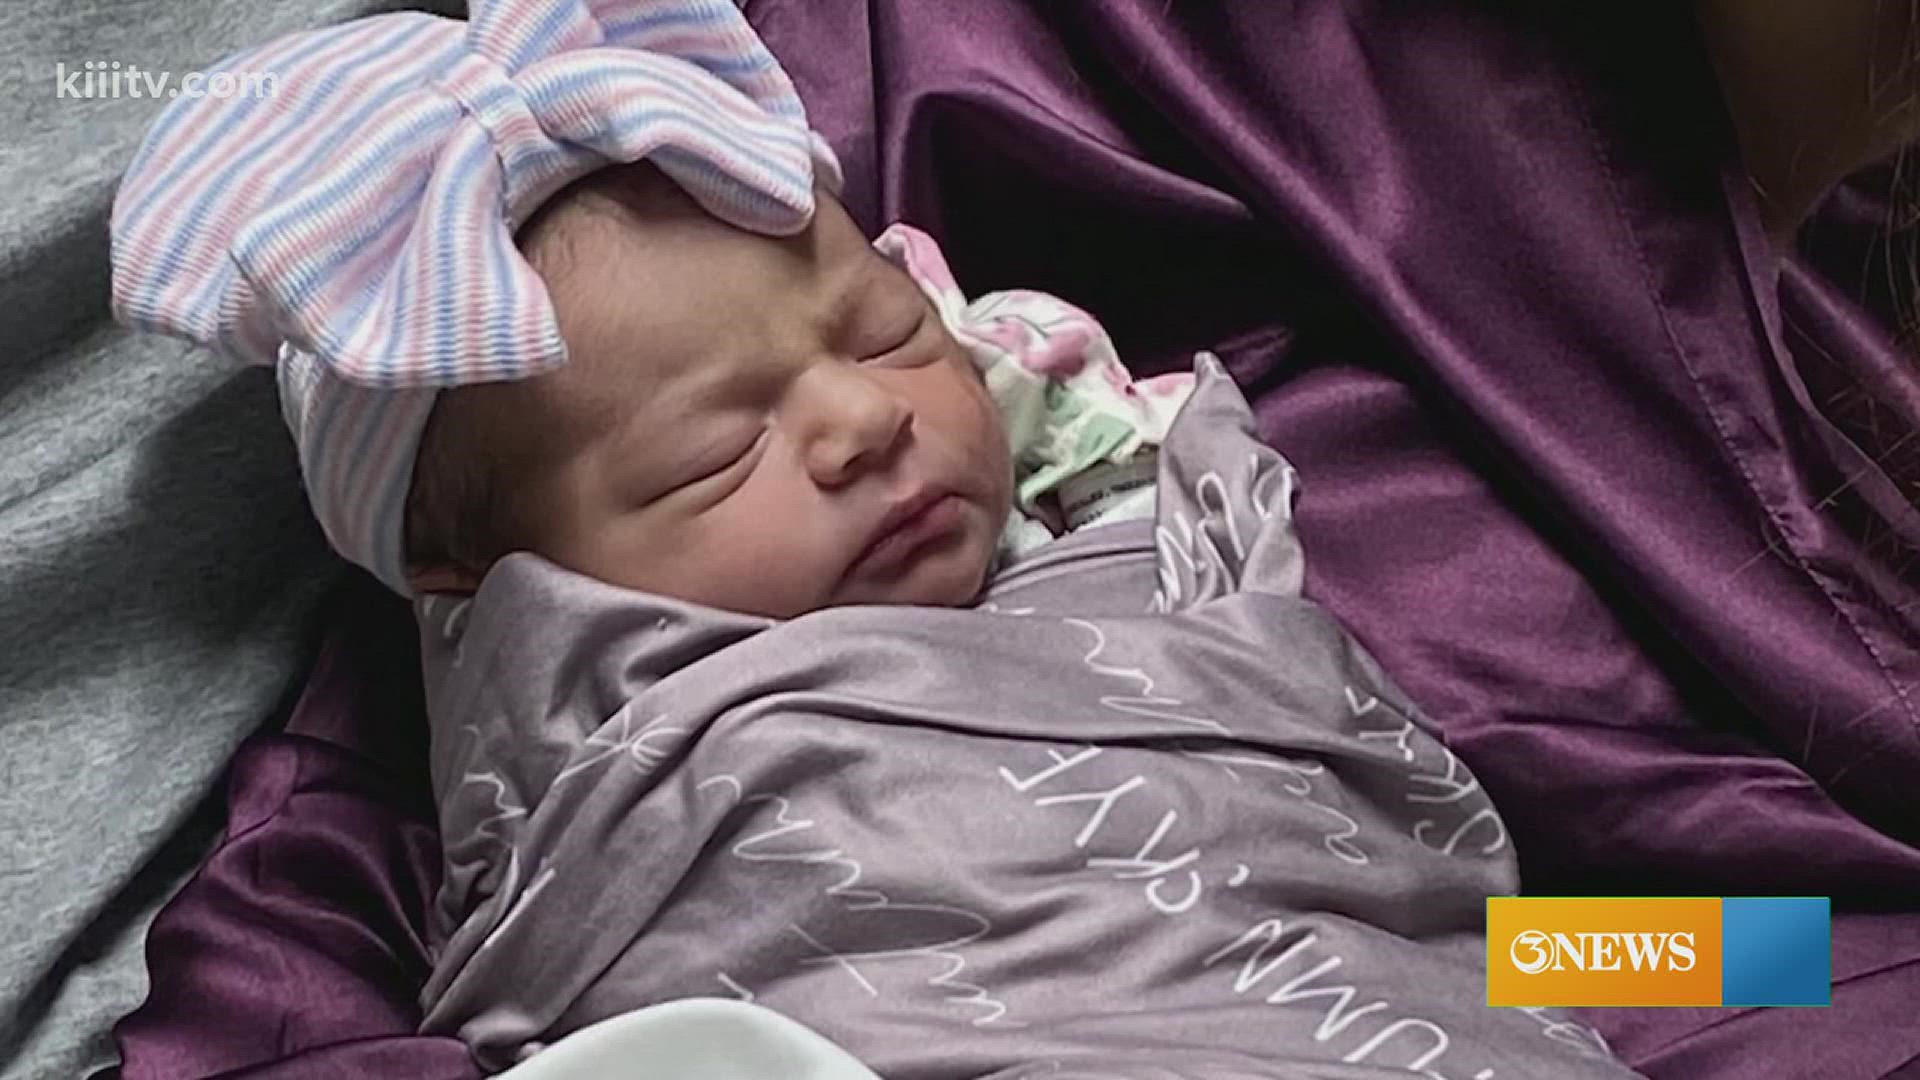 Born early Saturday morning, she's the first newborn of Corpus Christi.